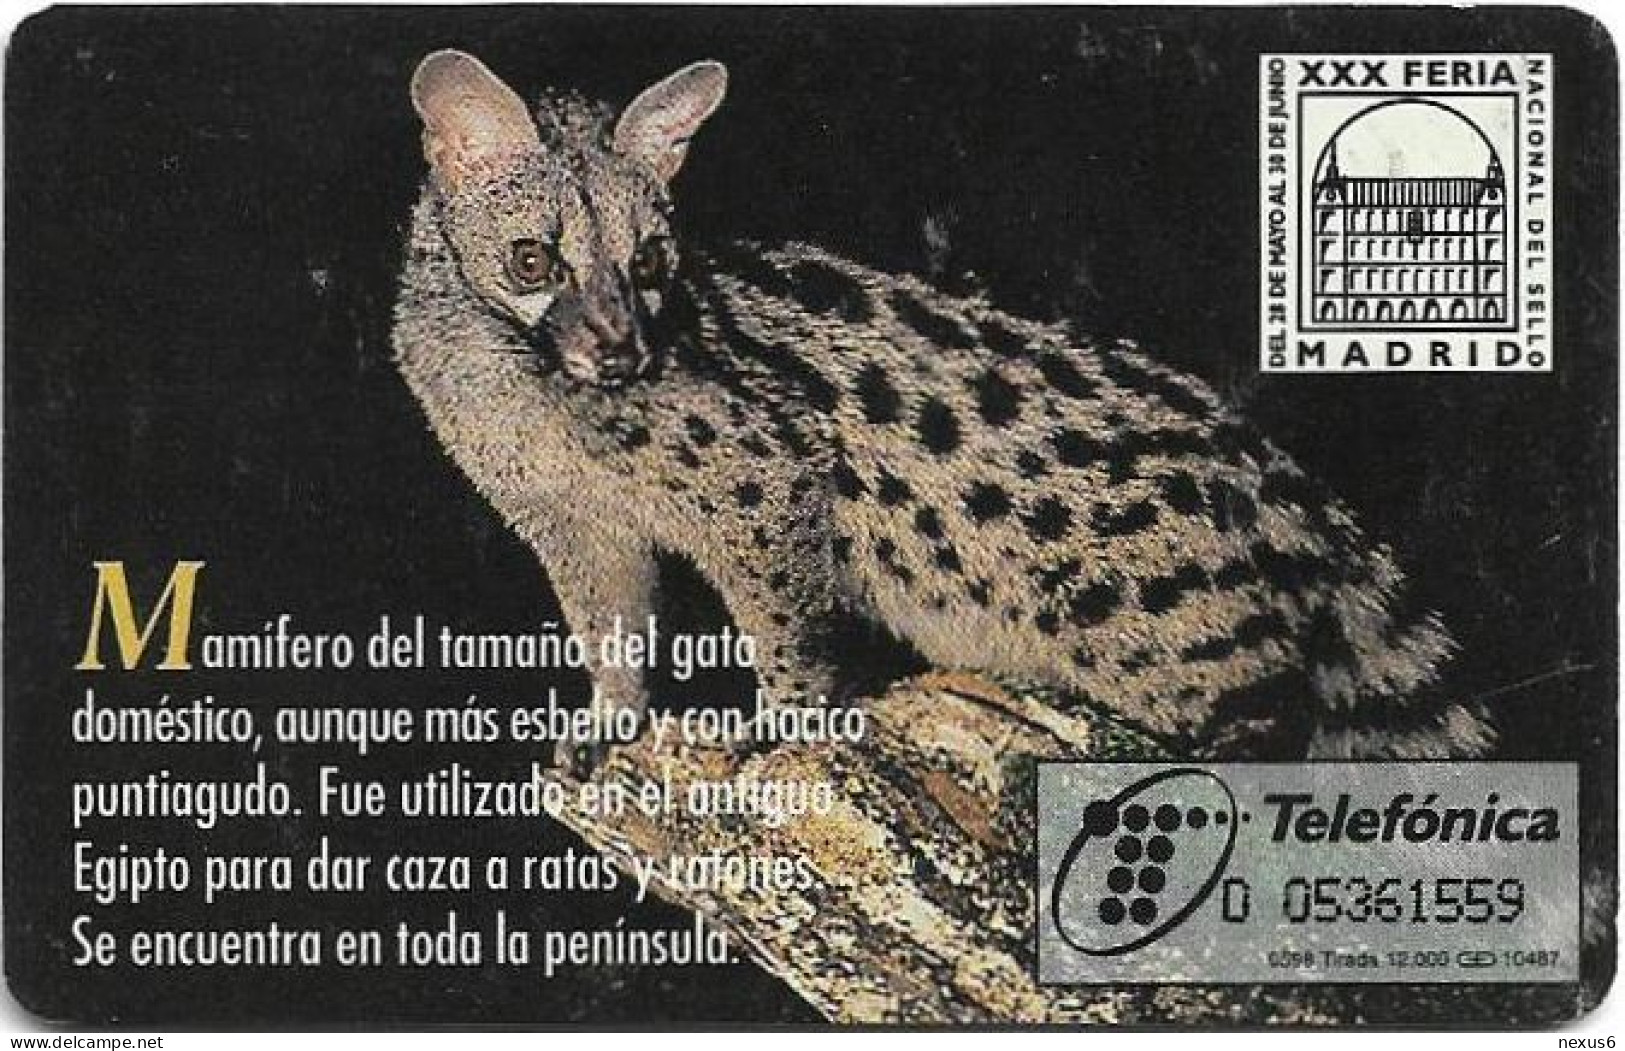 Spain - Telefonica - Fauna Iberica - Gineta Comun - P-330 - 05.1998, 12.000ex, Used - Privatausgaben